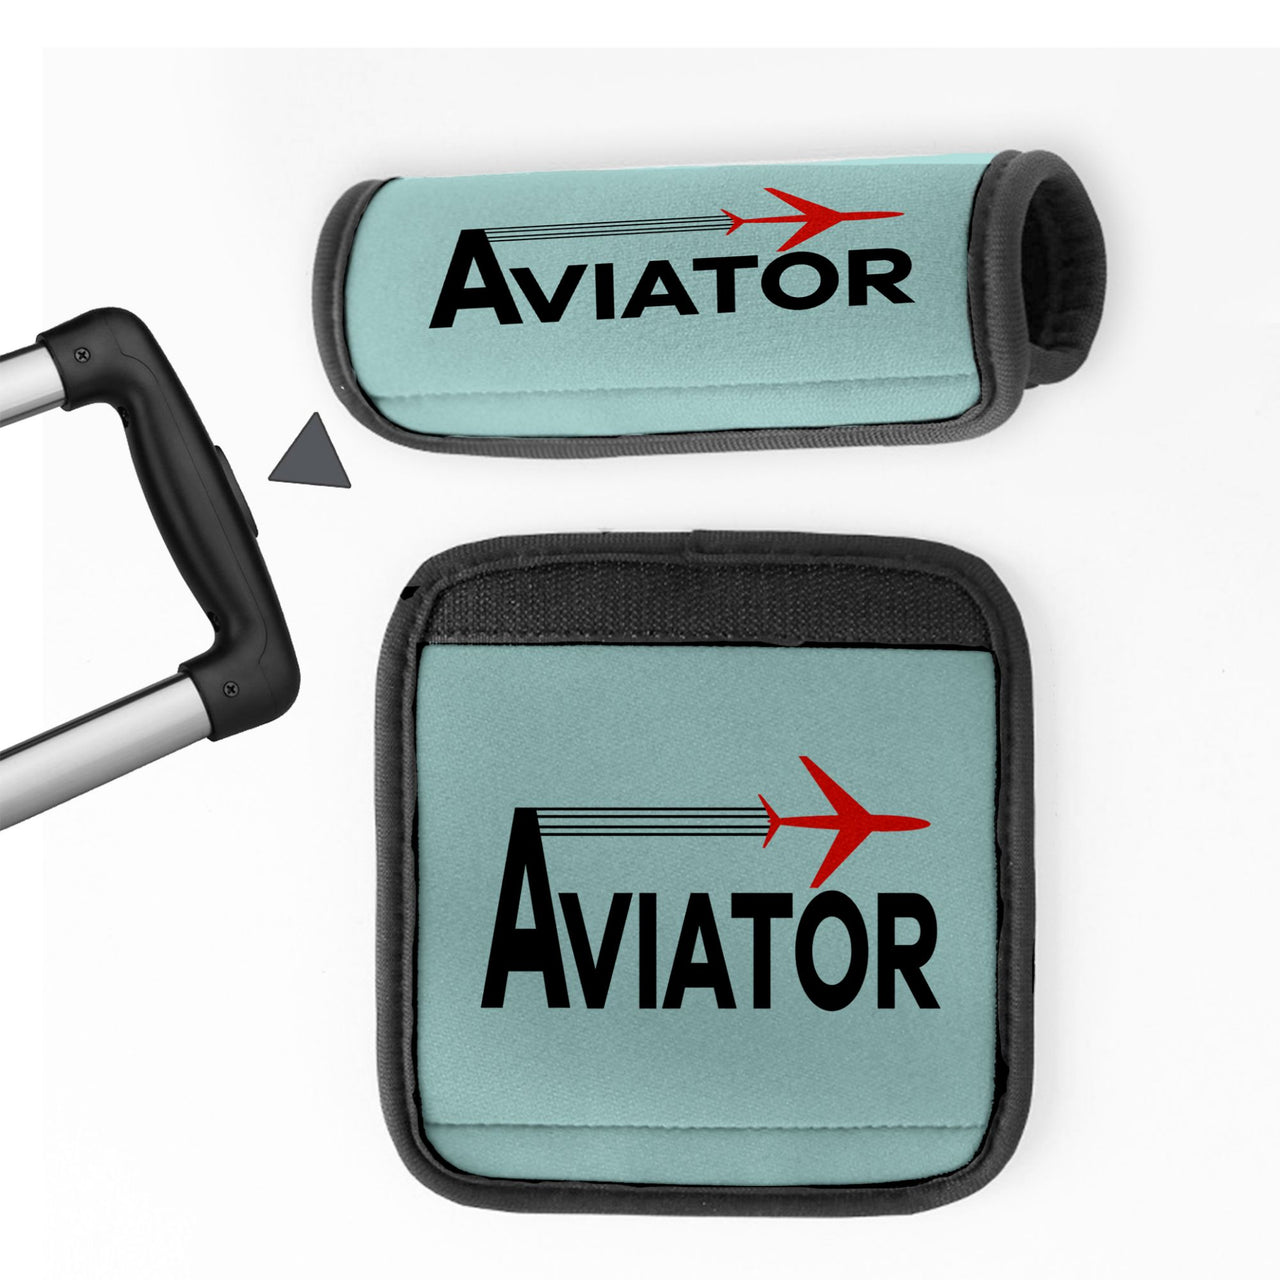 Aviator Designed Neoprene Luggage Handle Covers